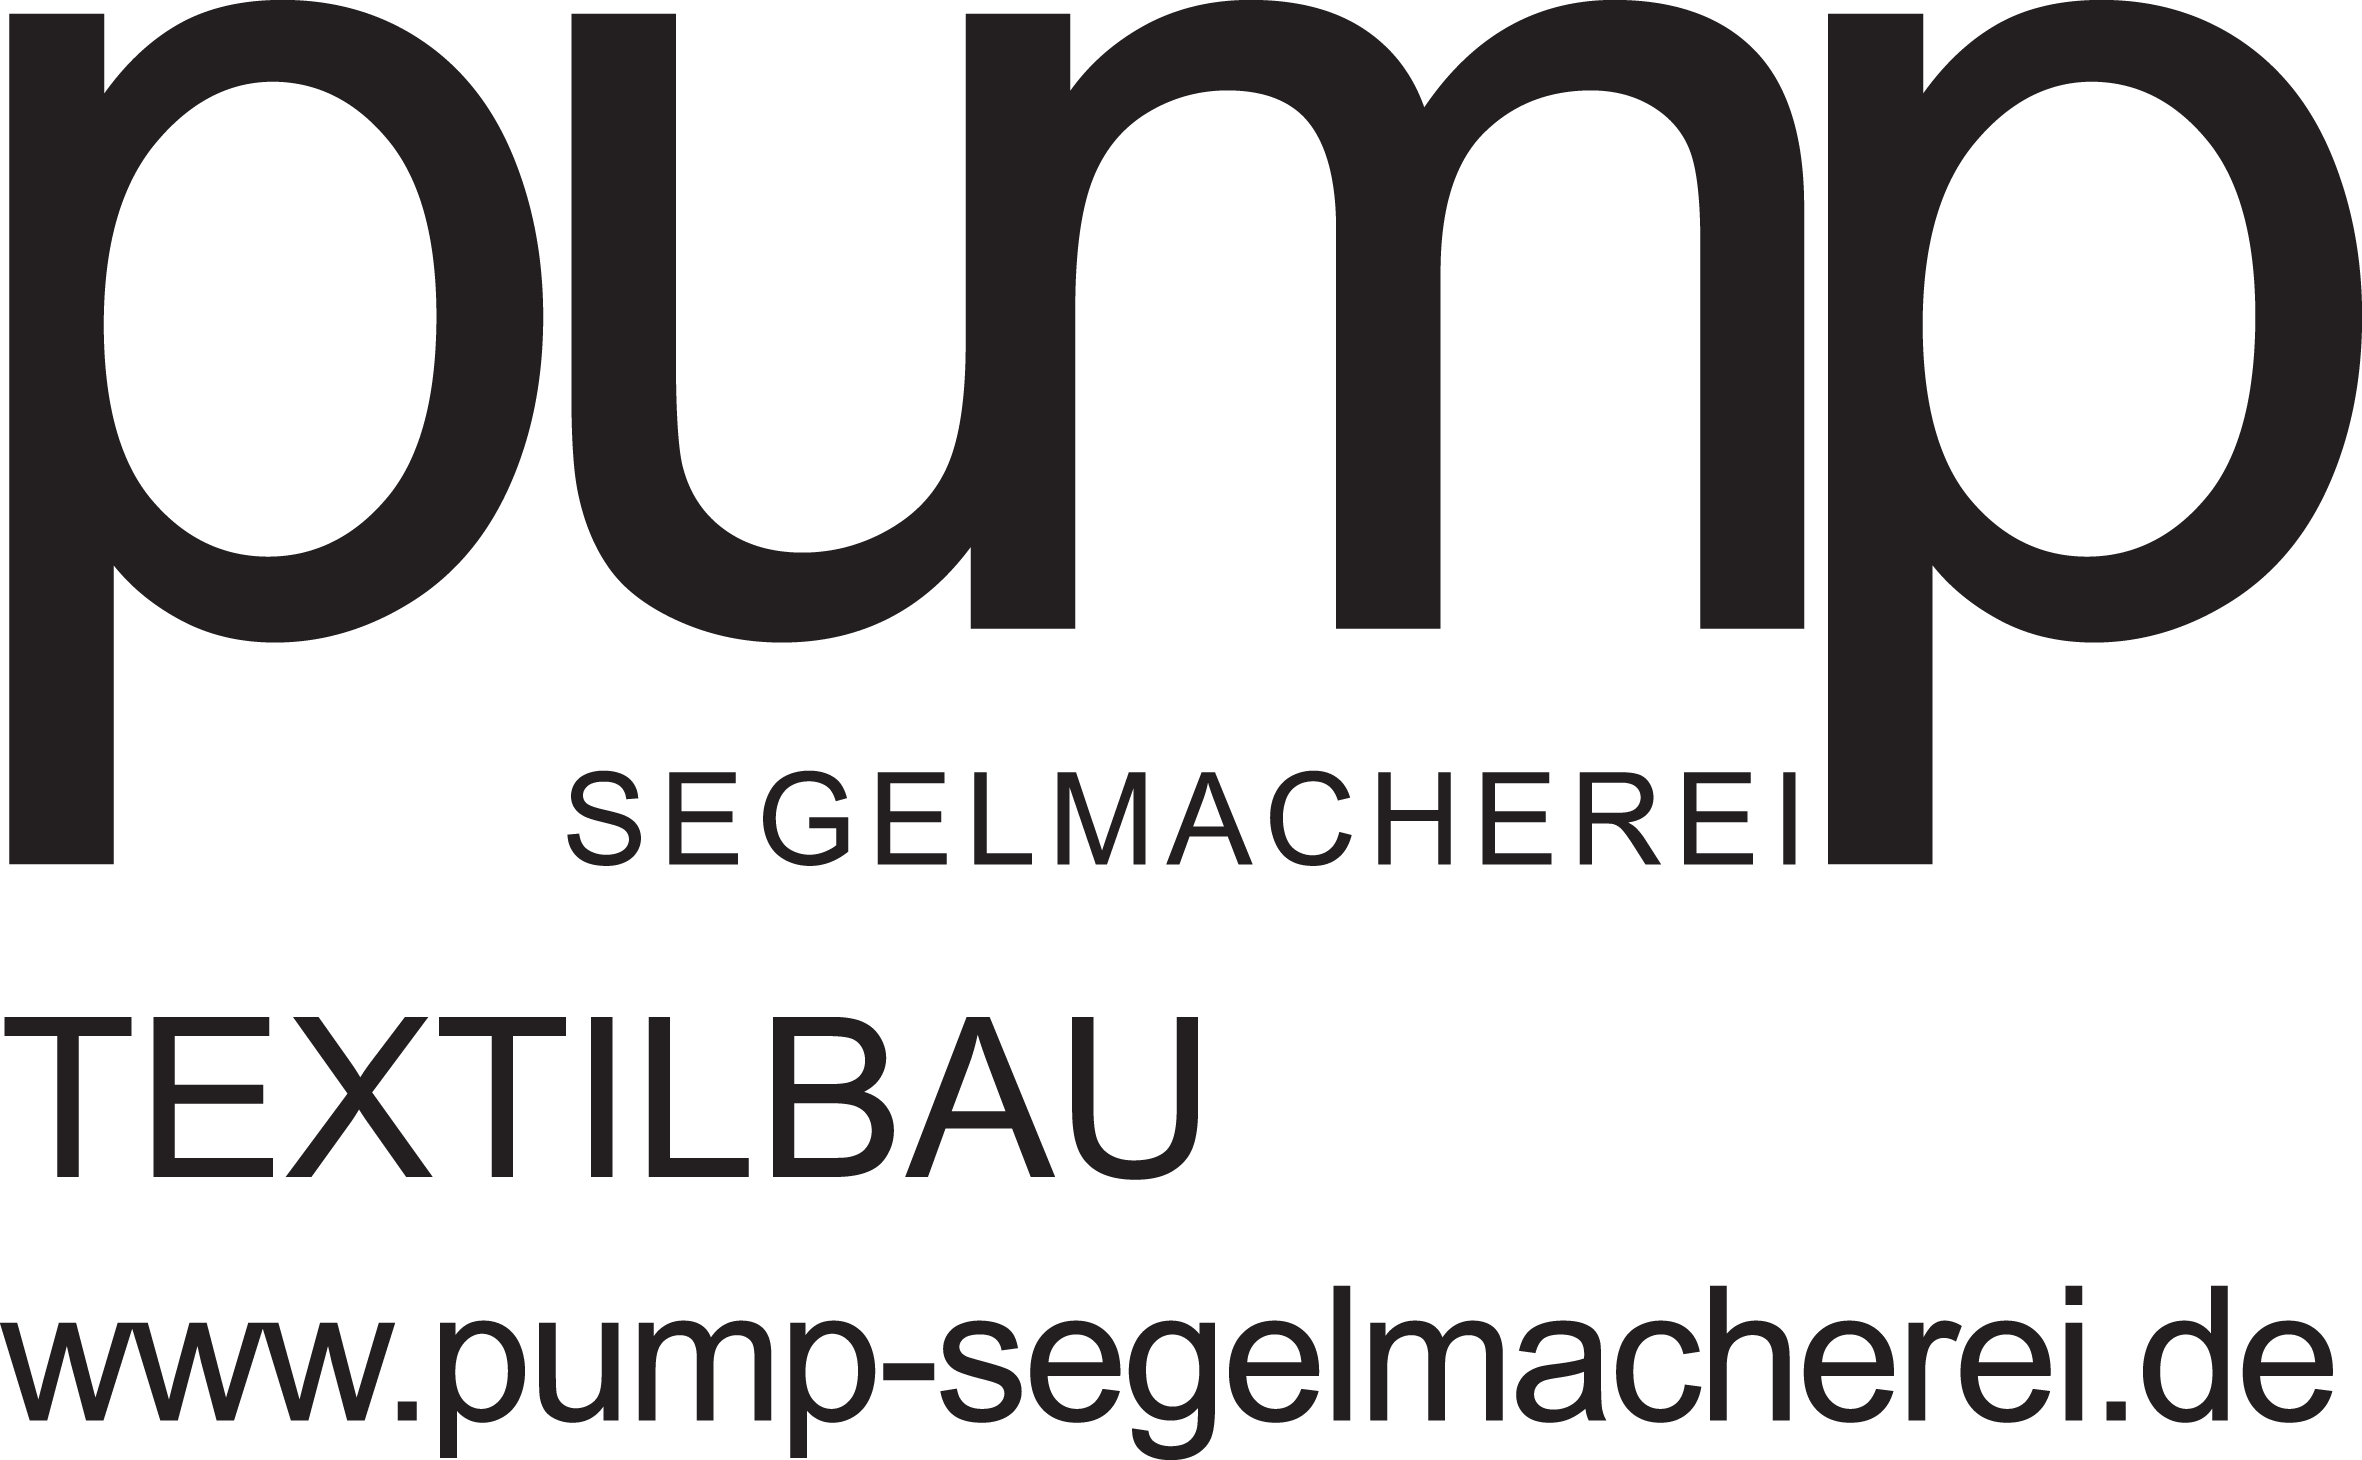 PUMP Kuchenbude Hamburg – Bootsverdecke & Persenninge